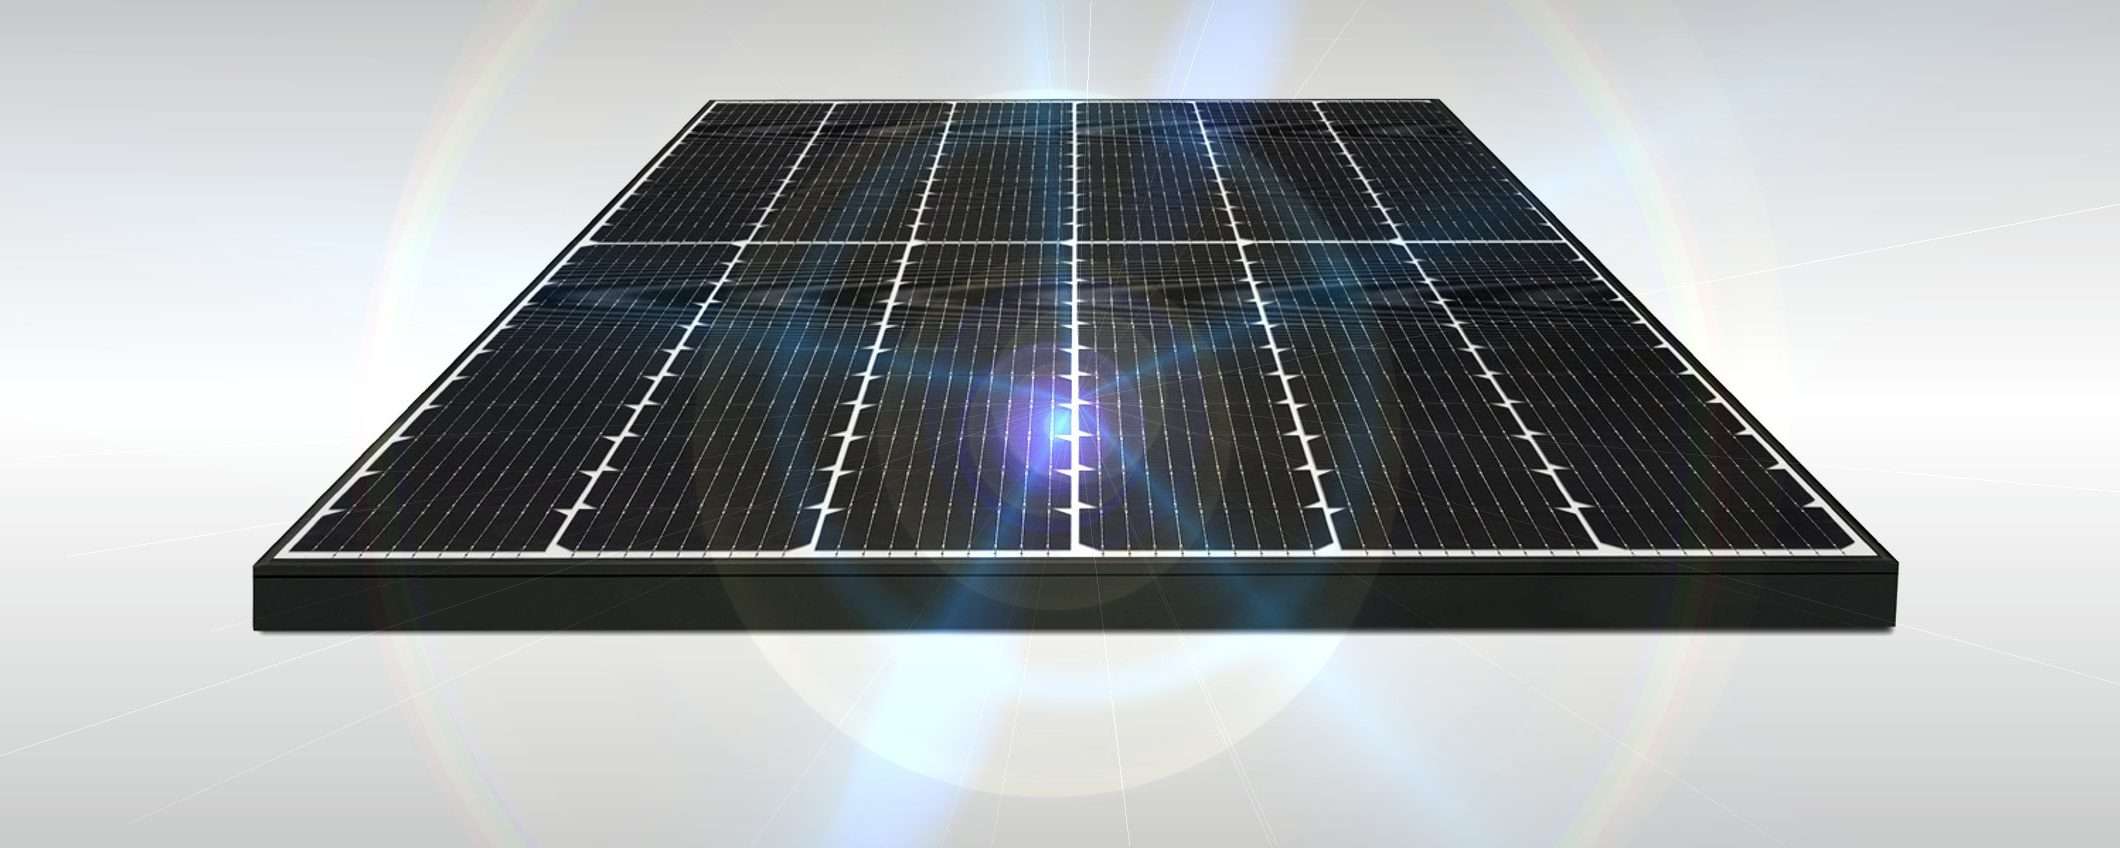 Fotovoltaico LG Solar NeON: l'efficienza aumenta sempre